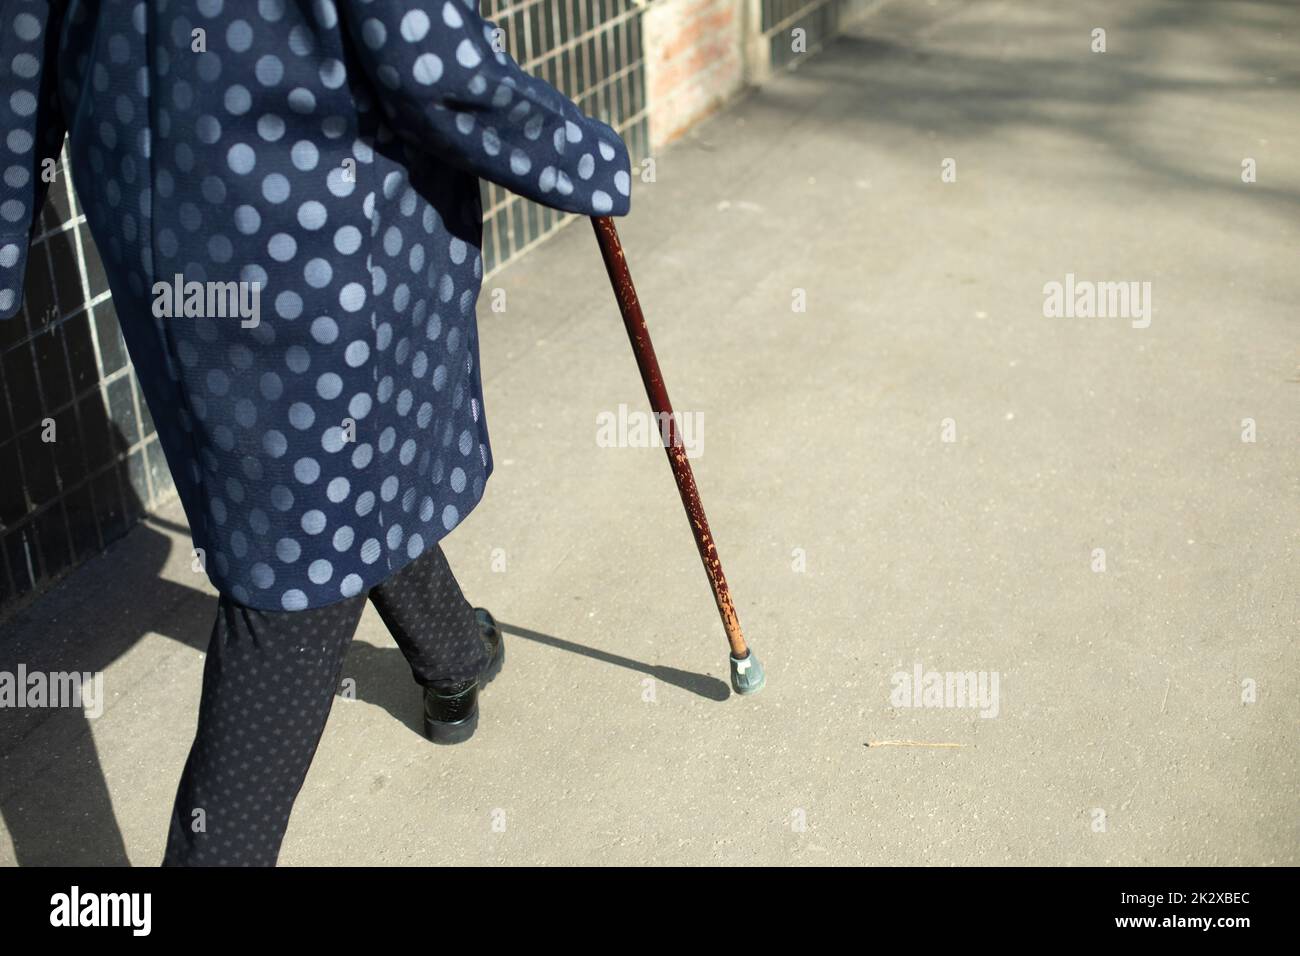 Grandma with walking stick. Woman walks on asphalt. Stock Photo